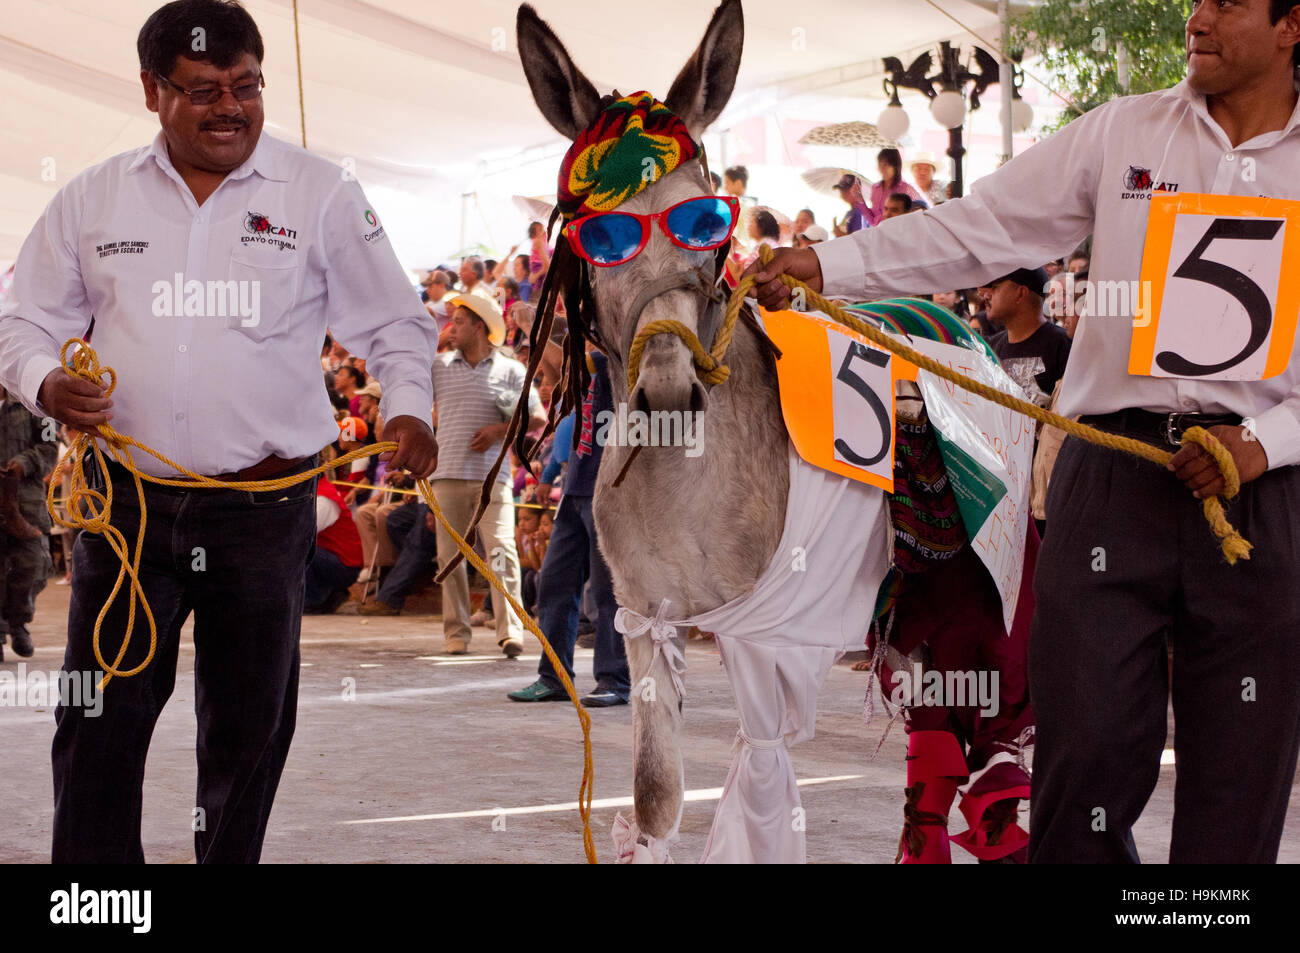 Donkey with a Rastafarian costume during the Donkey Fair (Feria del burro) in Otumba, Mexico Stock Photo